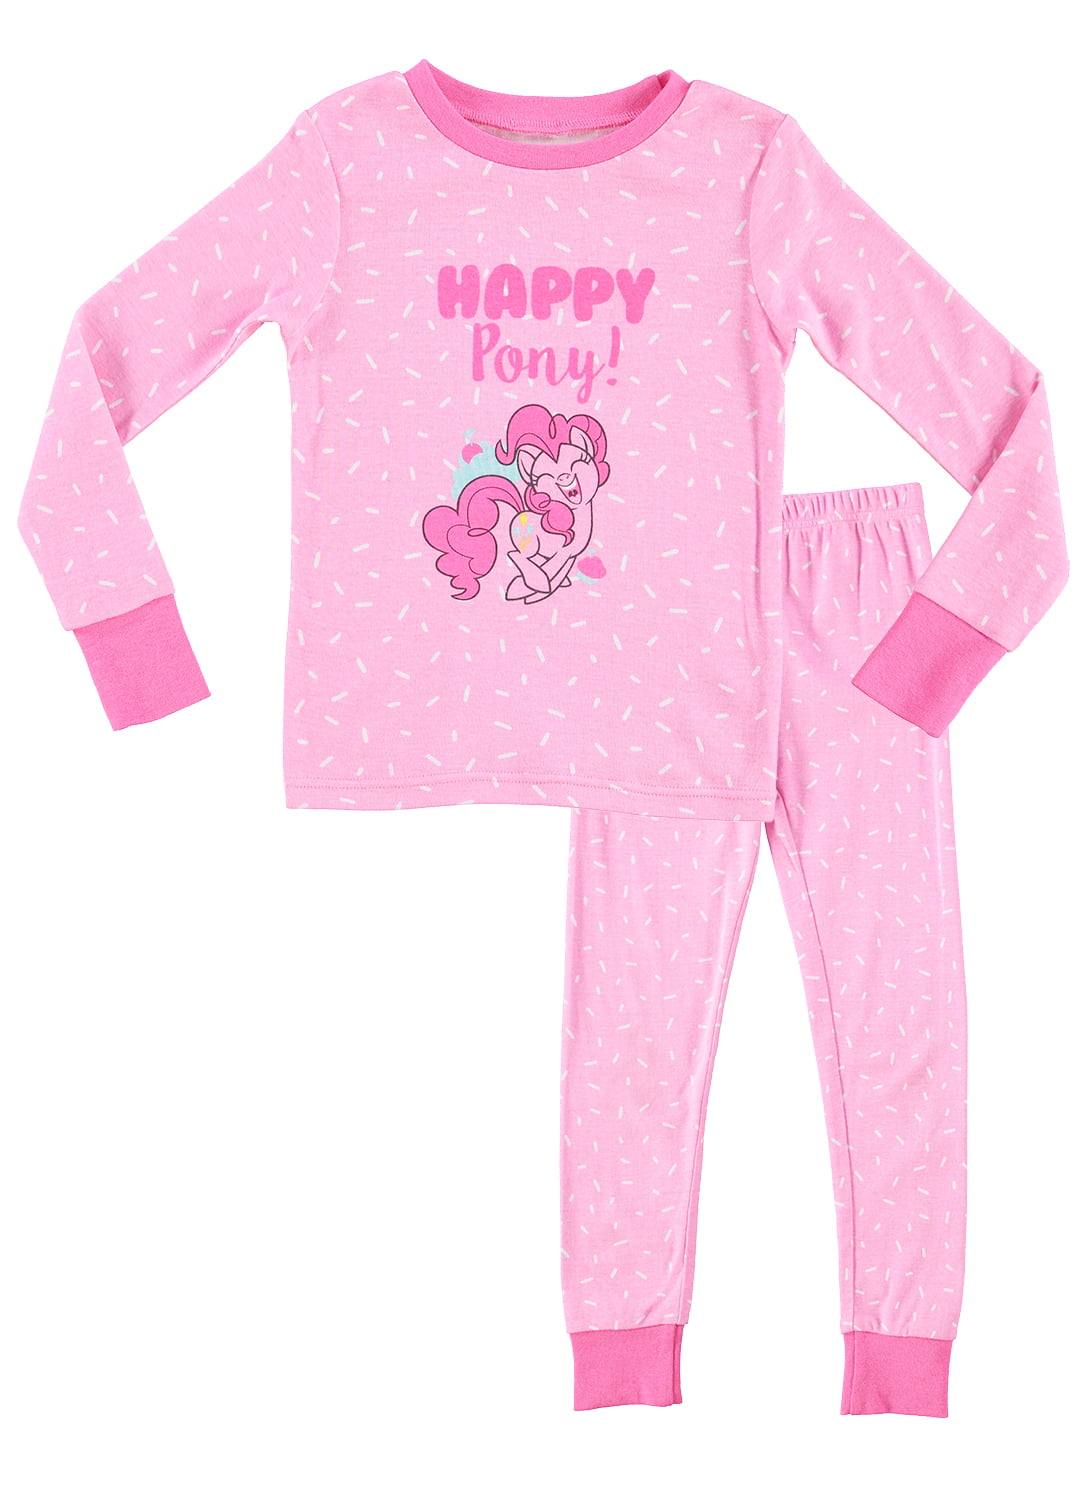 Little and Big Girls Pajamas 100/% Cotton Pjs Set Kids Clothes Sleepwear Toddlers